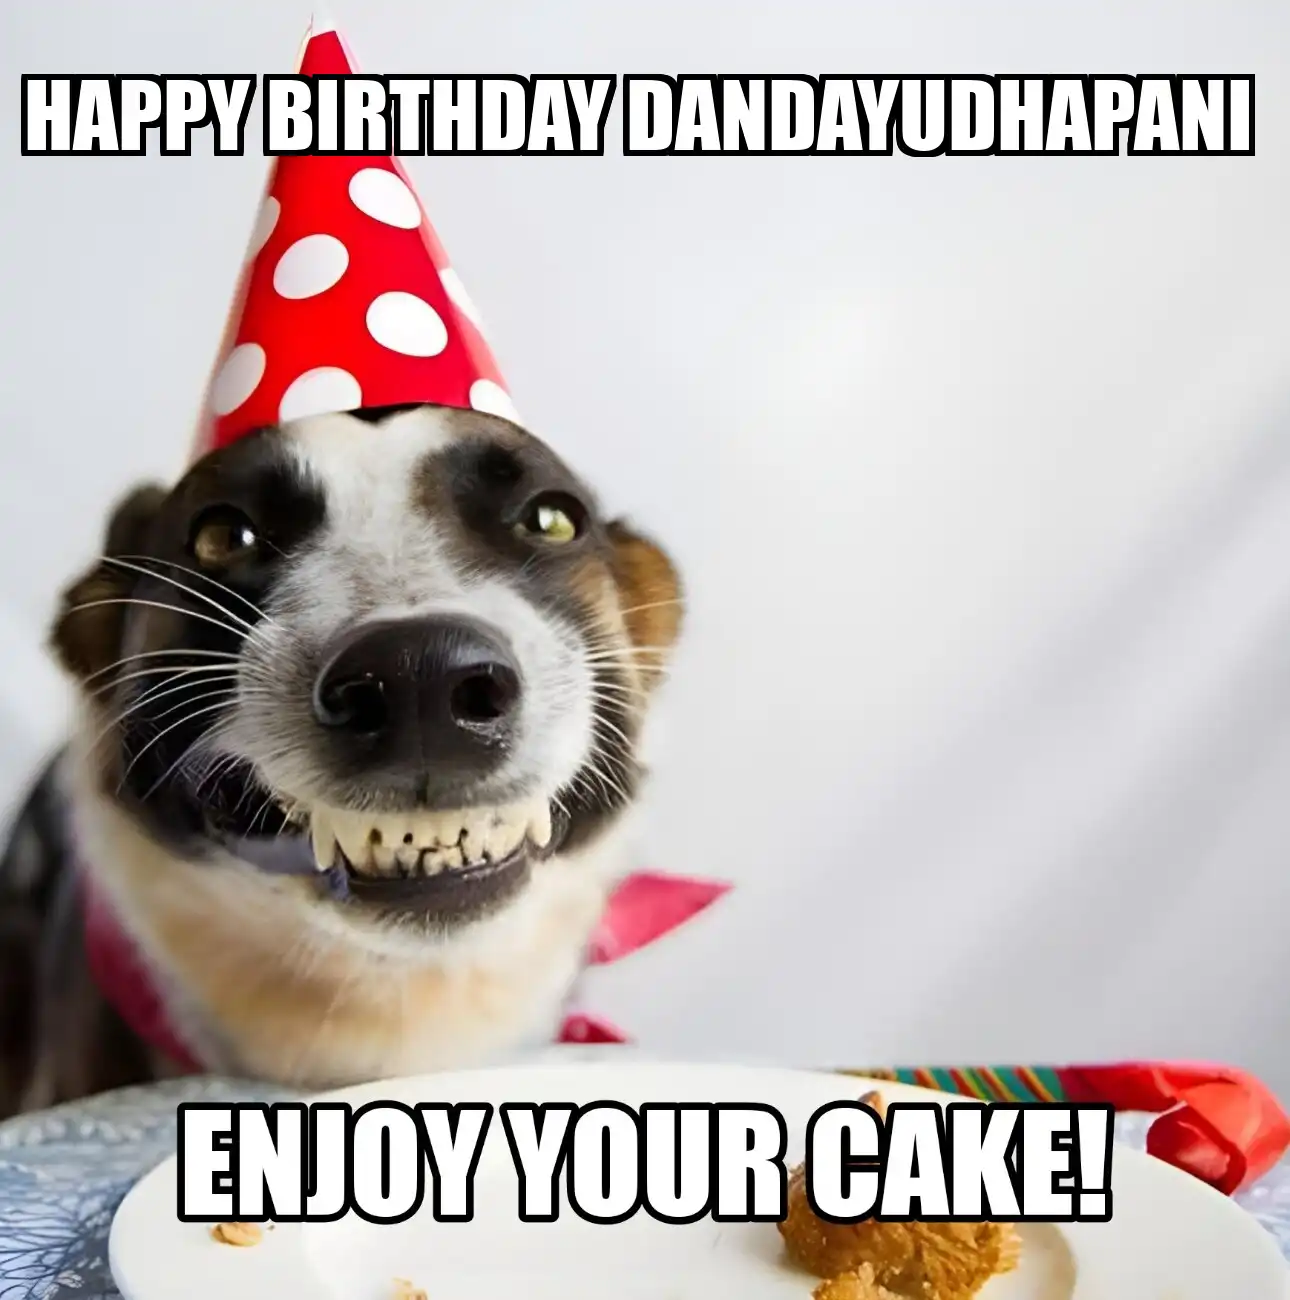 Happy Birthday Dandayudhapani Enjoy Your Cake Dog Meme